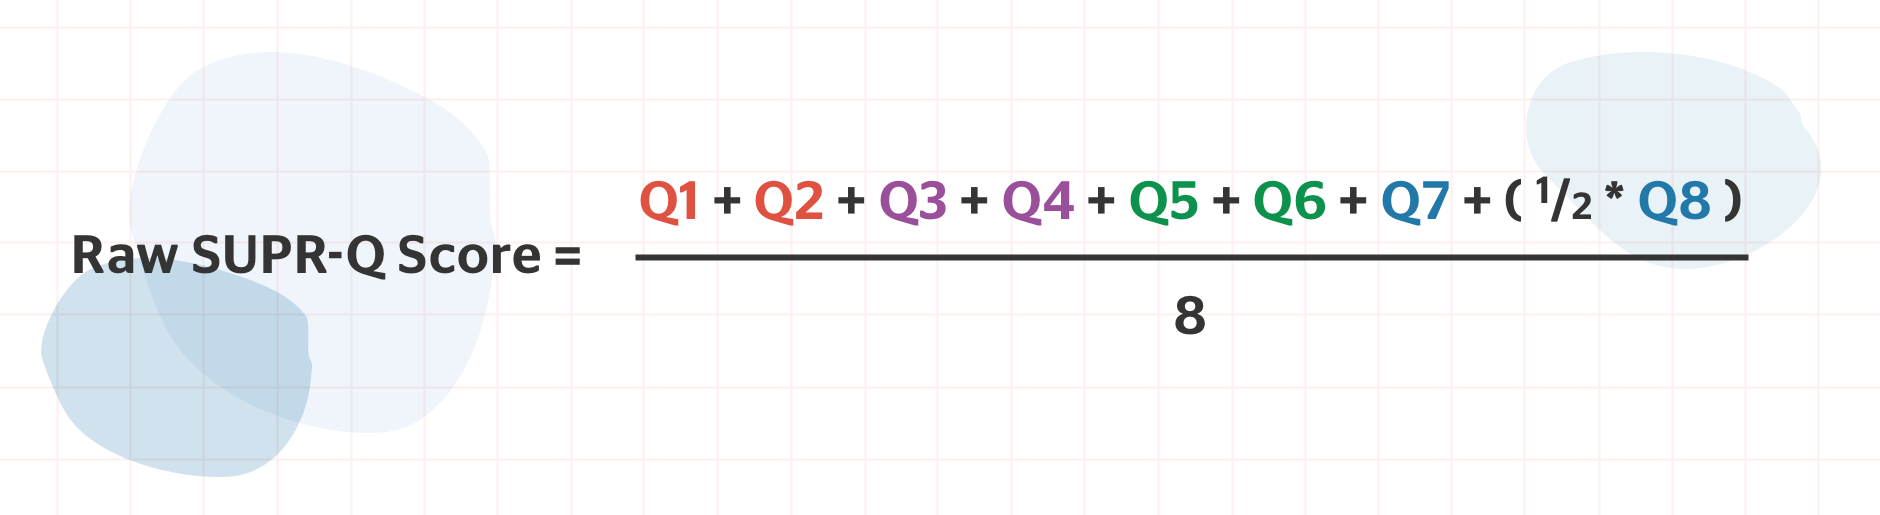 SUPR-Q calculator: Raw SUPR-Q Score = AVG(Q1:Q7, 1/2 * Q8)